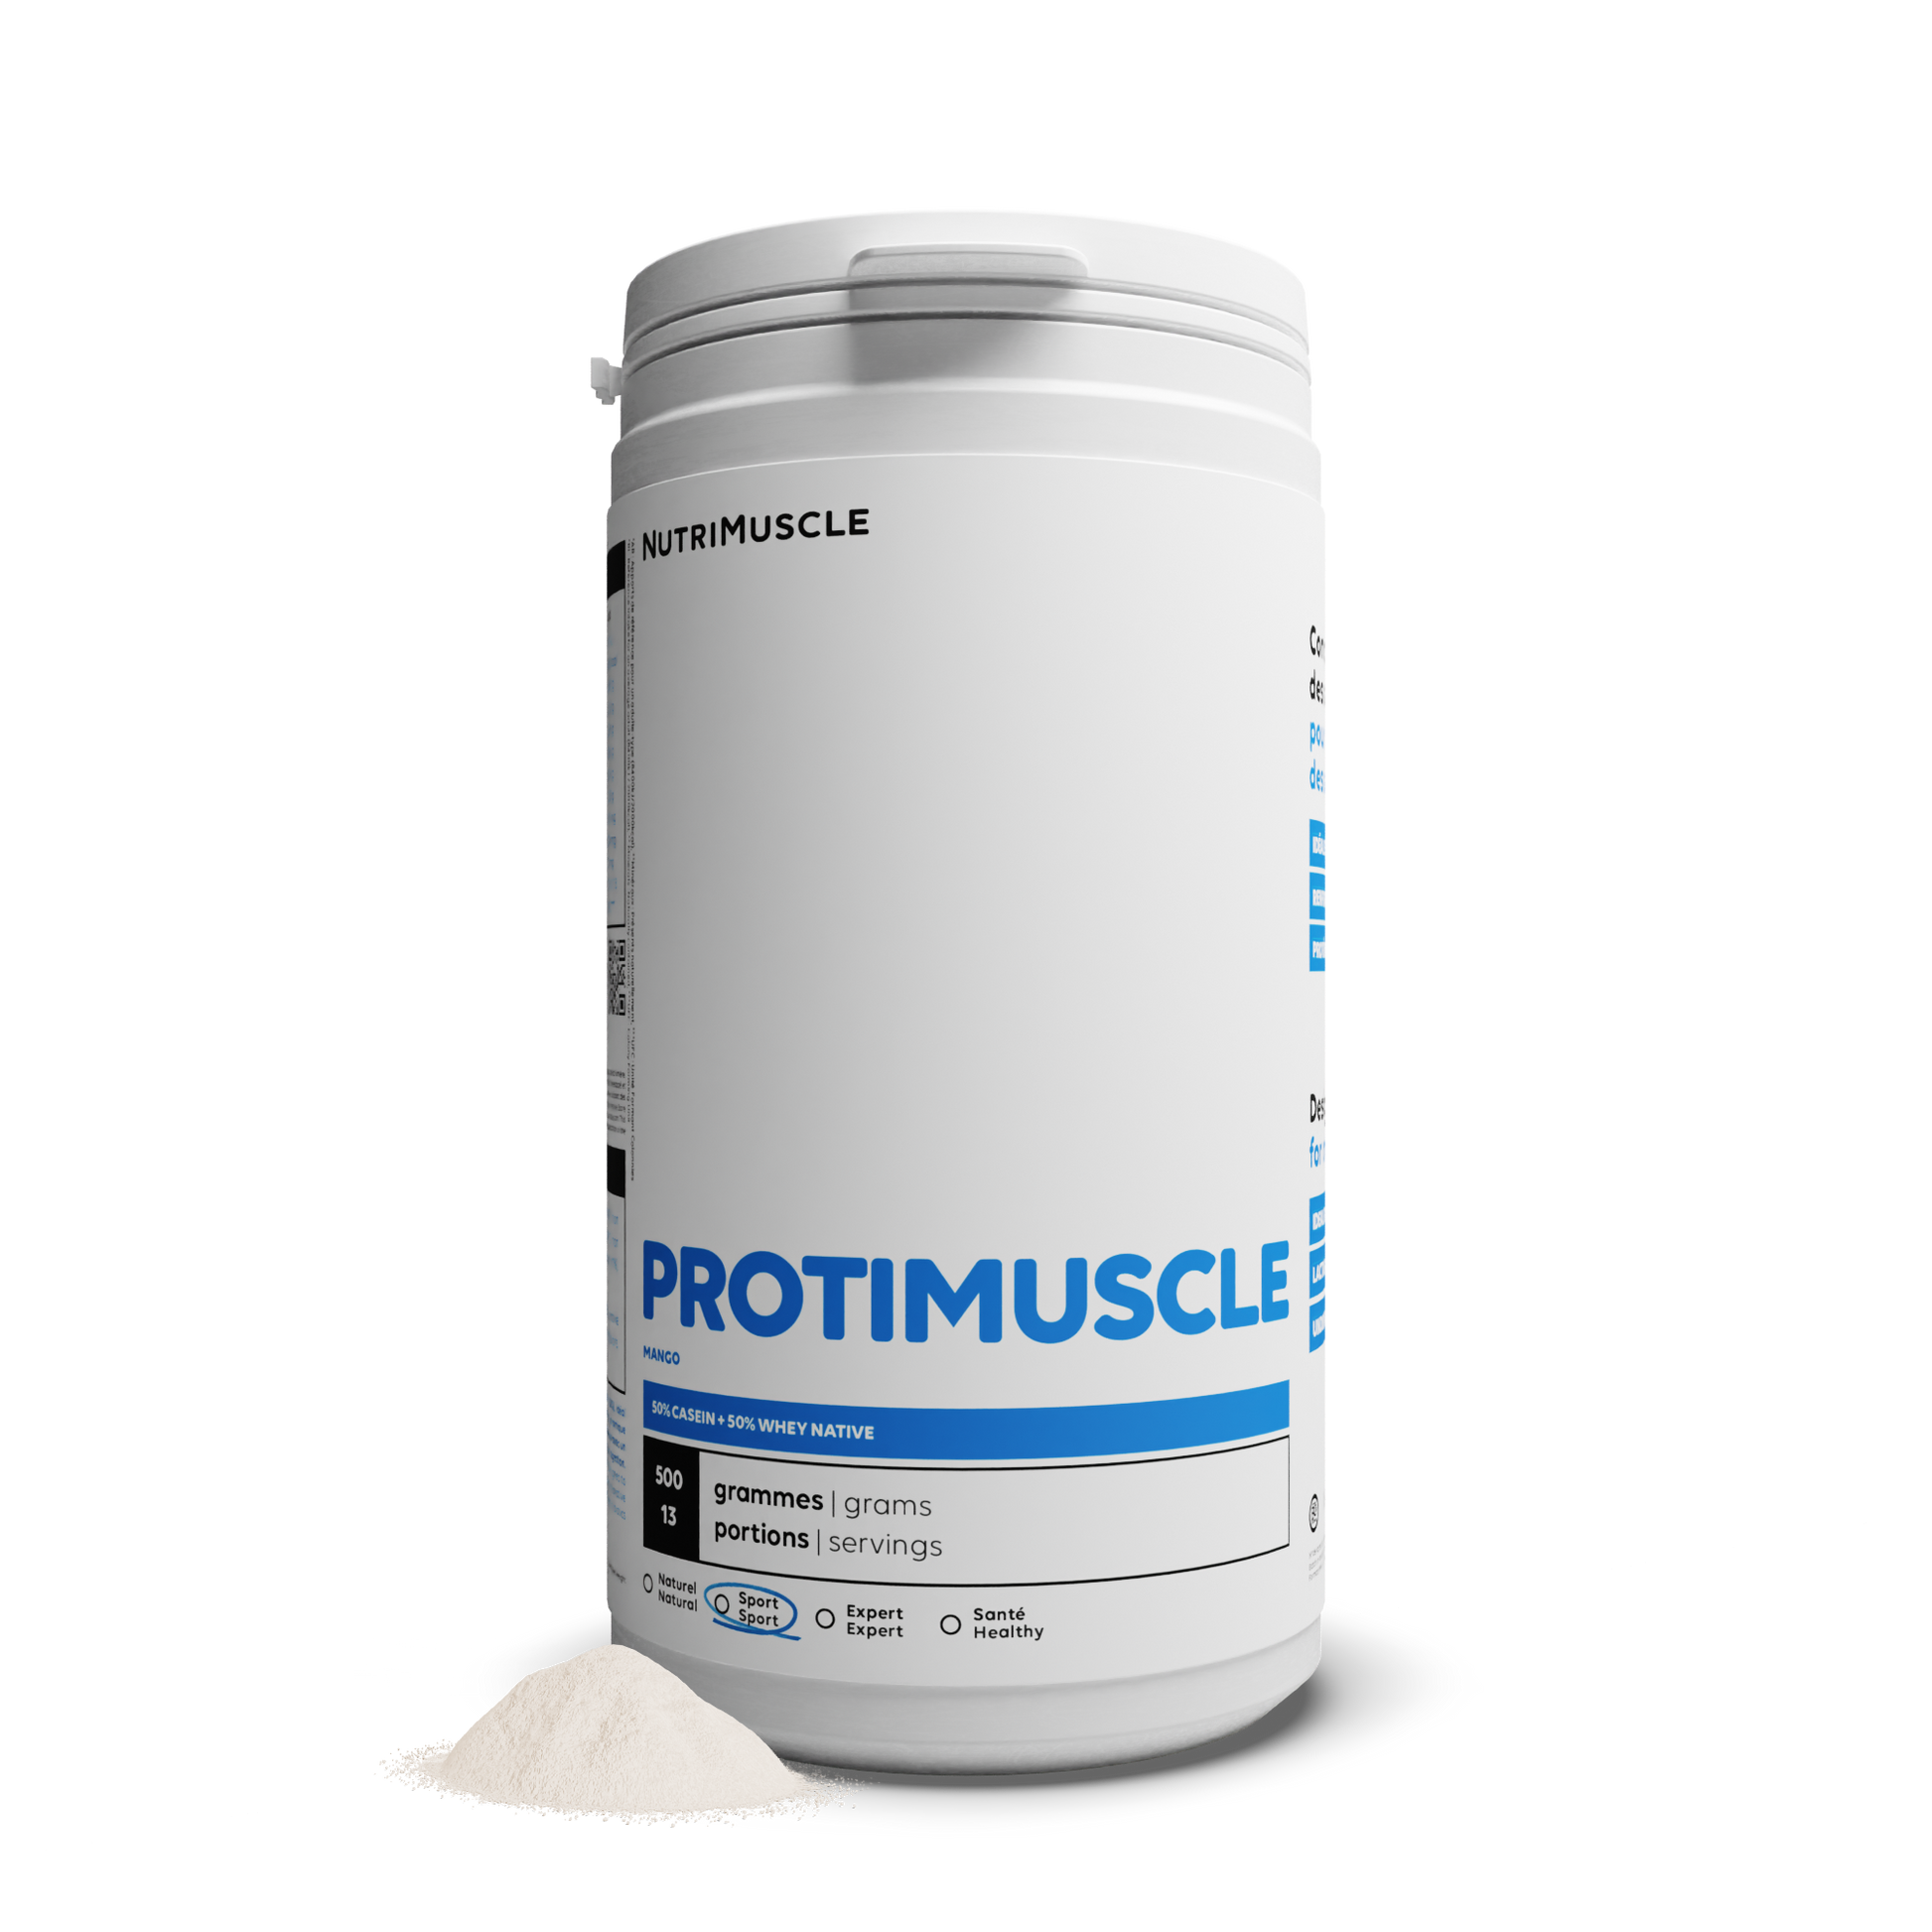 Protimuscle: mezcle proteína